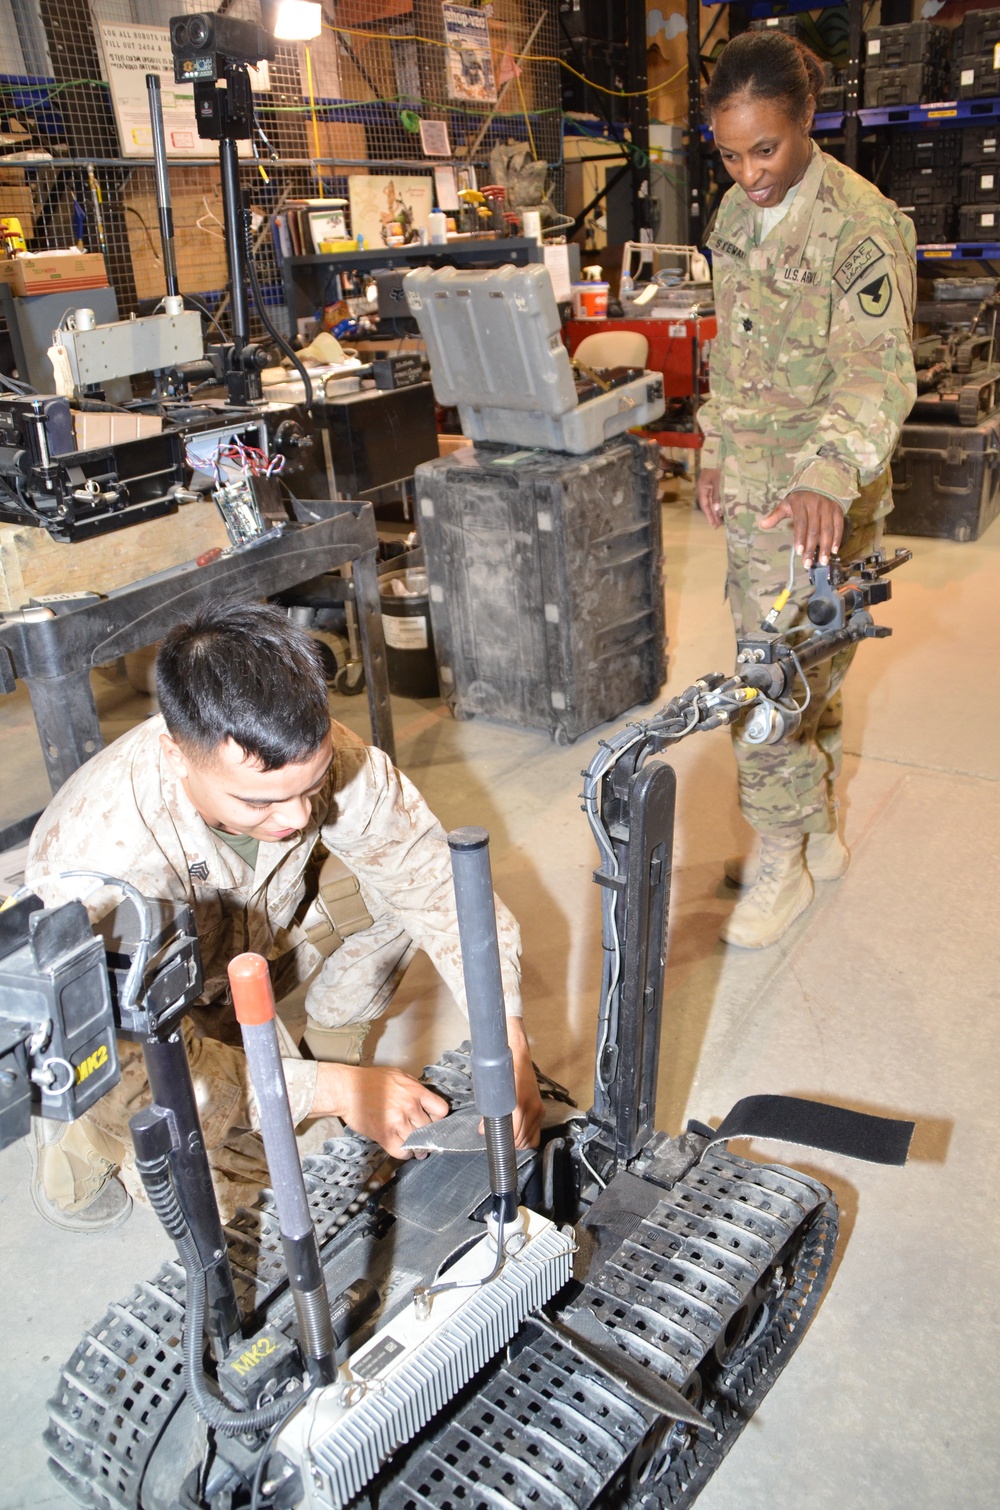 401st Army Field Support Brigade ALT-D visits Joint Robotics